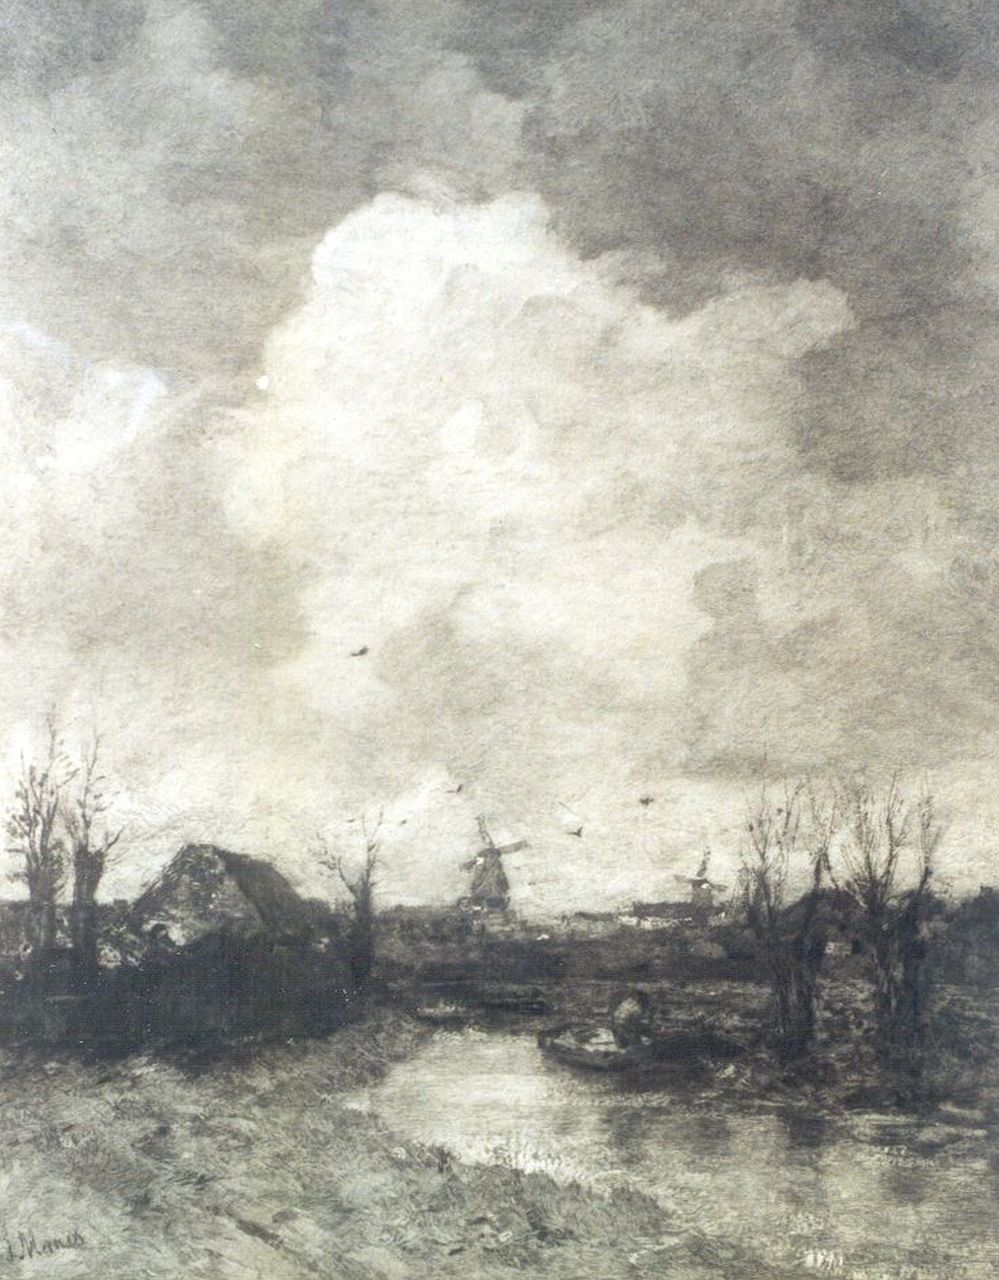 Graadt van Roggen J.M.  | 'Johannes' Mattheus Graadt van Roggen, A landscape, with a windmill in the distance near The Hague, after J.H. Maris, Radierung auf Papier 50,0 x 63,0 cm, signed l.r.